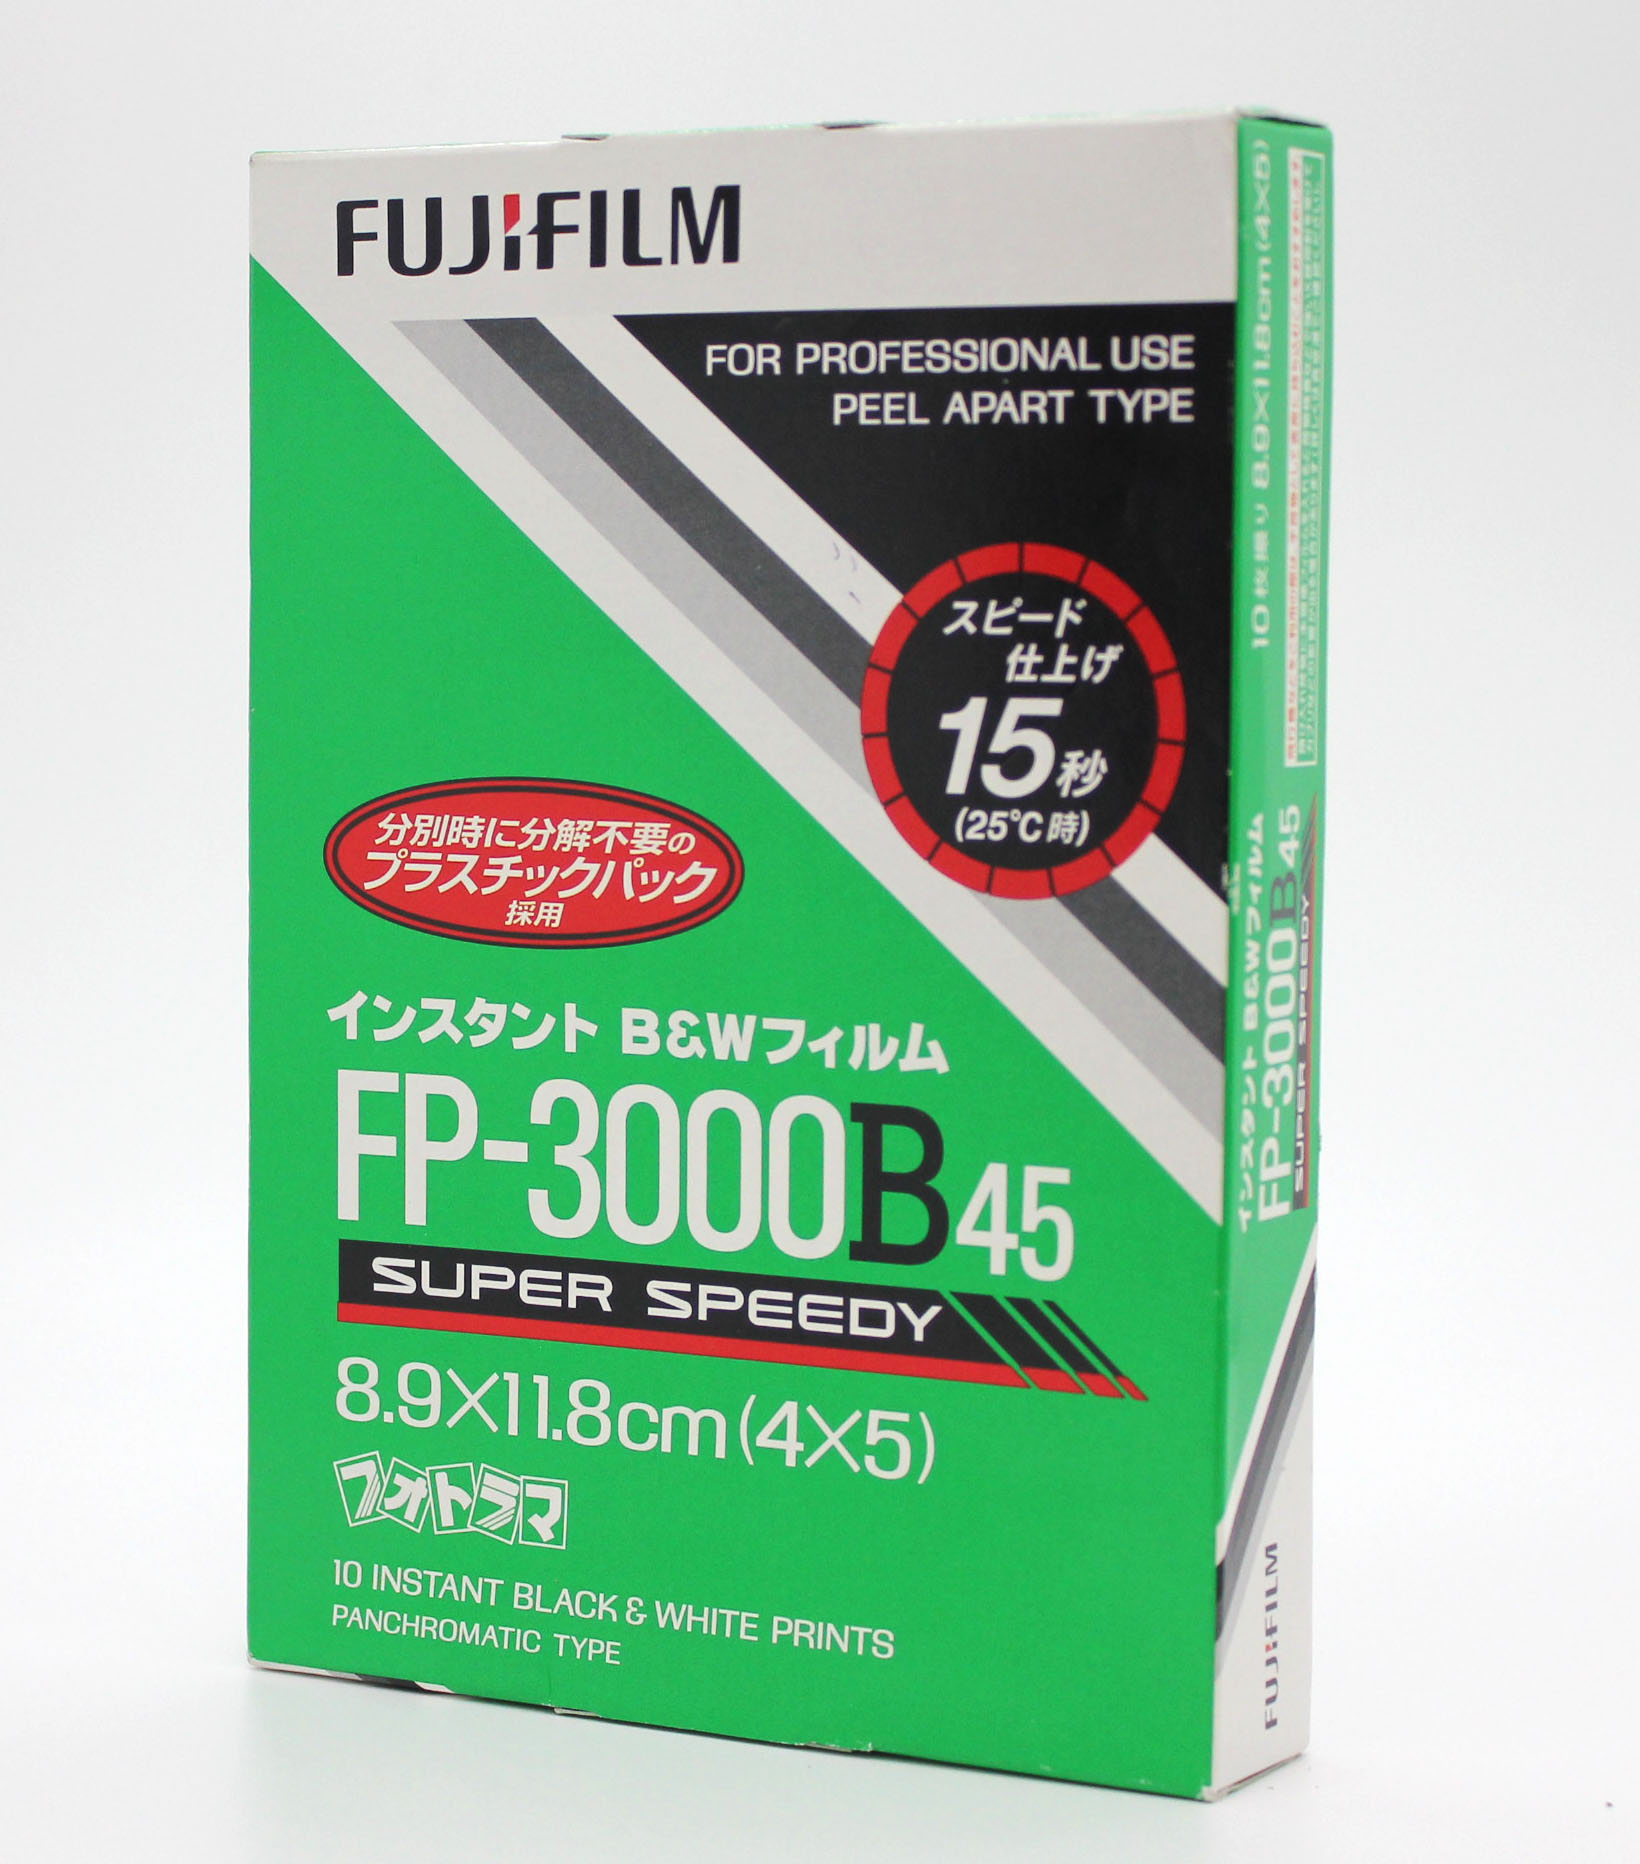  Fuji Fujifilm FP-3000B45 4x5 8.9x11.8cm Instant Black & White Film (EXP 10/2010) from Japan Photo 0